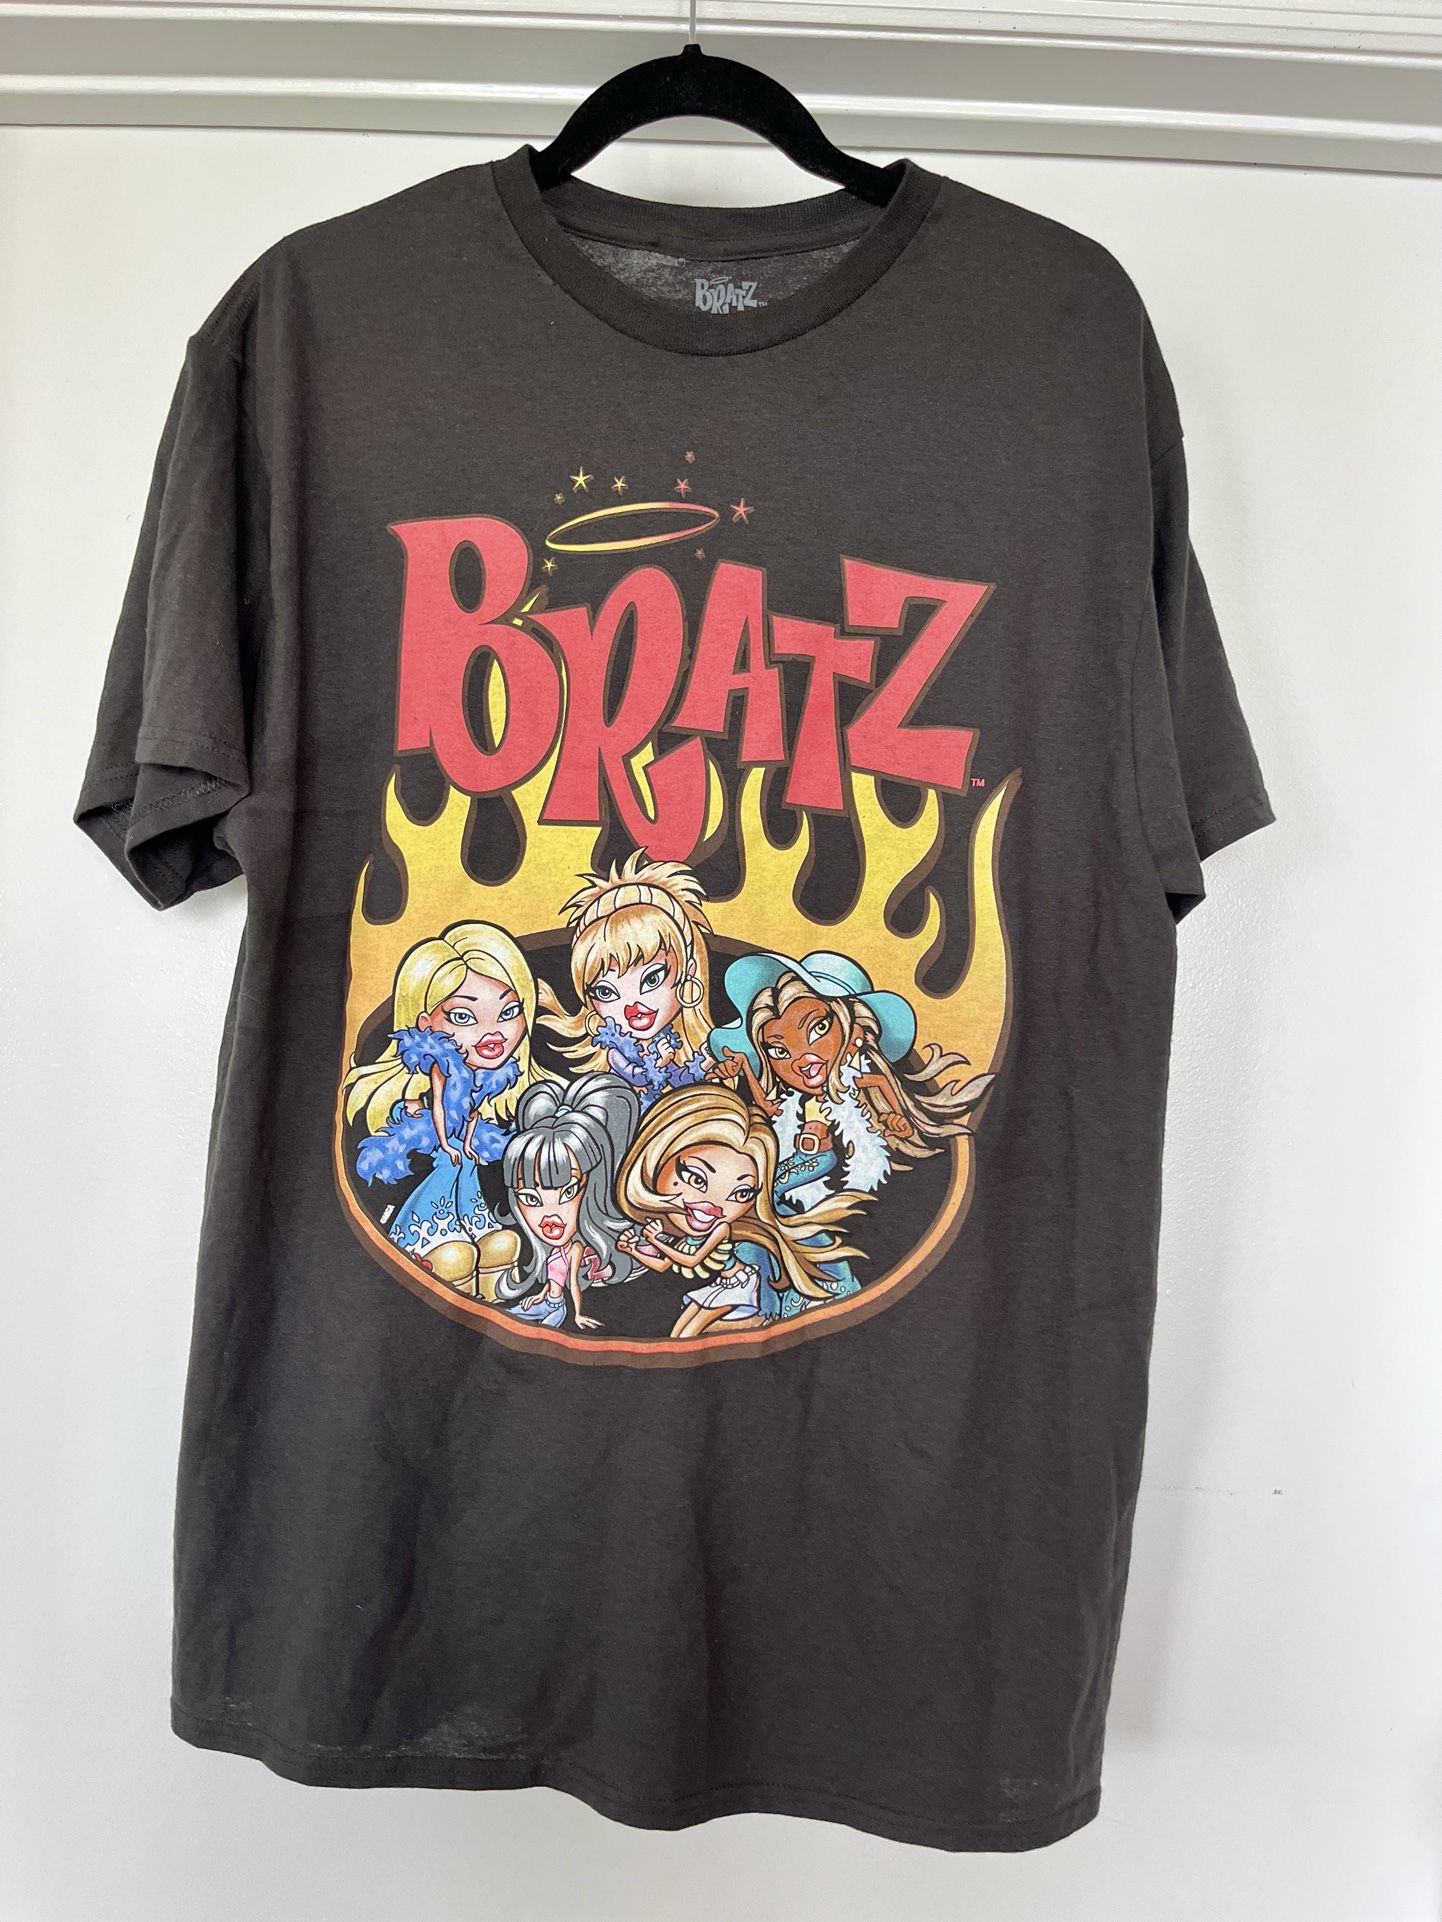 Bratz vintage style t shirt size L